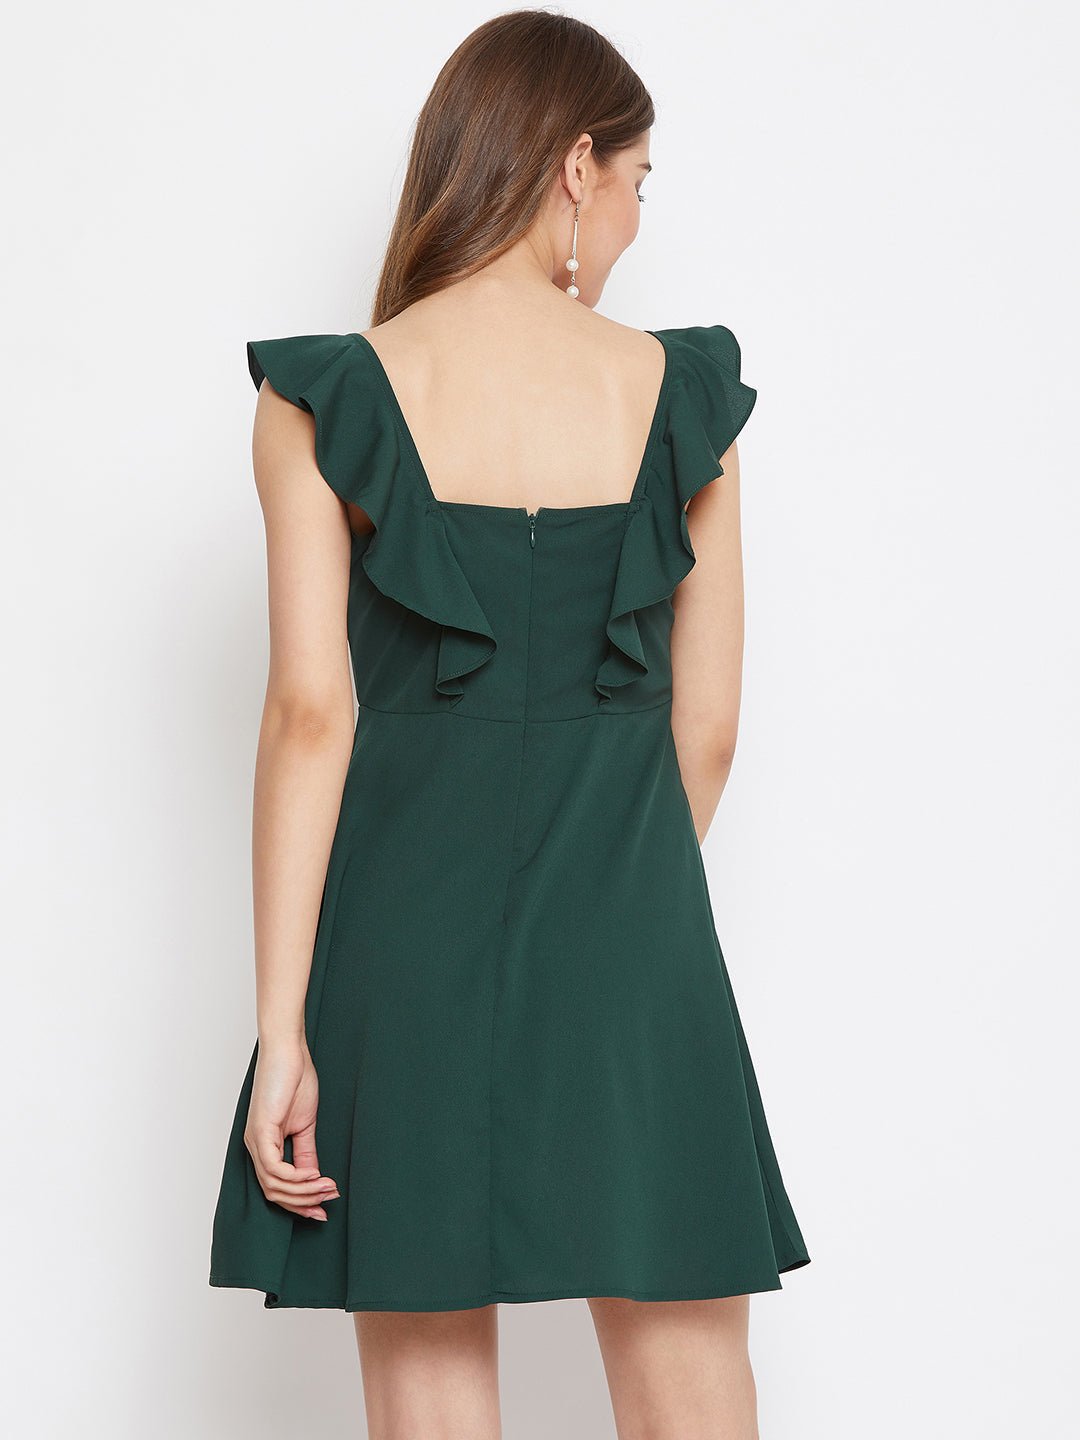 Folk Republic Women Solid Green Sleeveless Ruffled Fit & Flare Mini Dress - #folk republic#